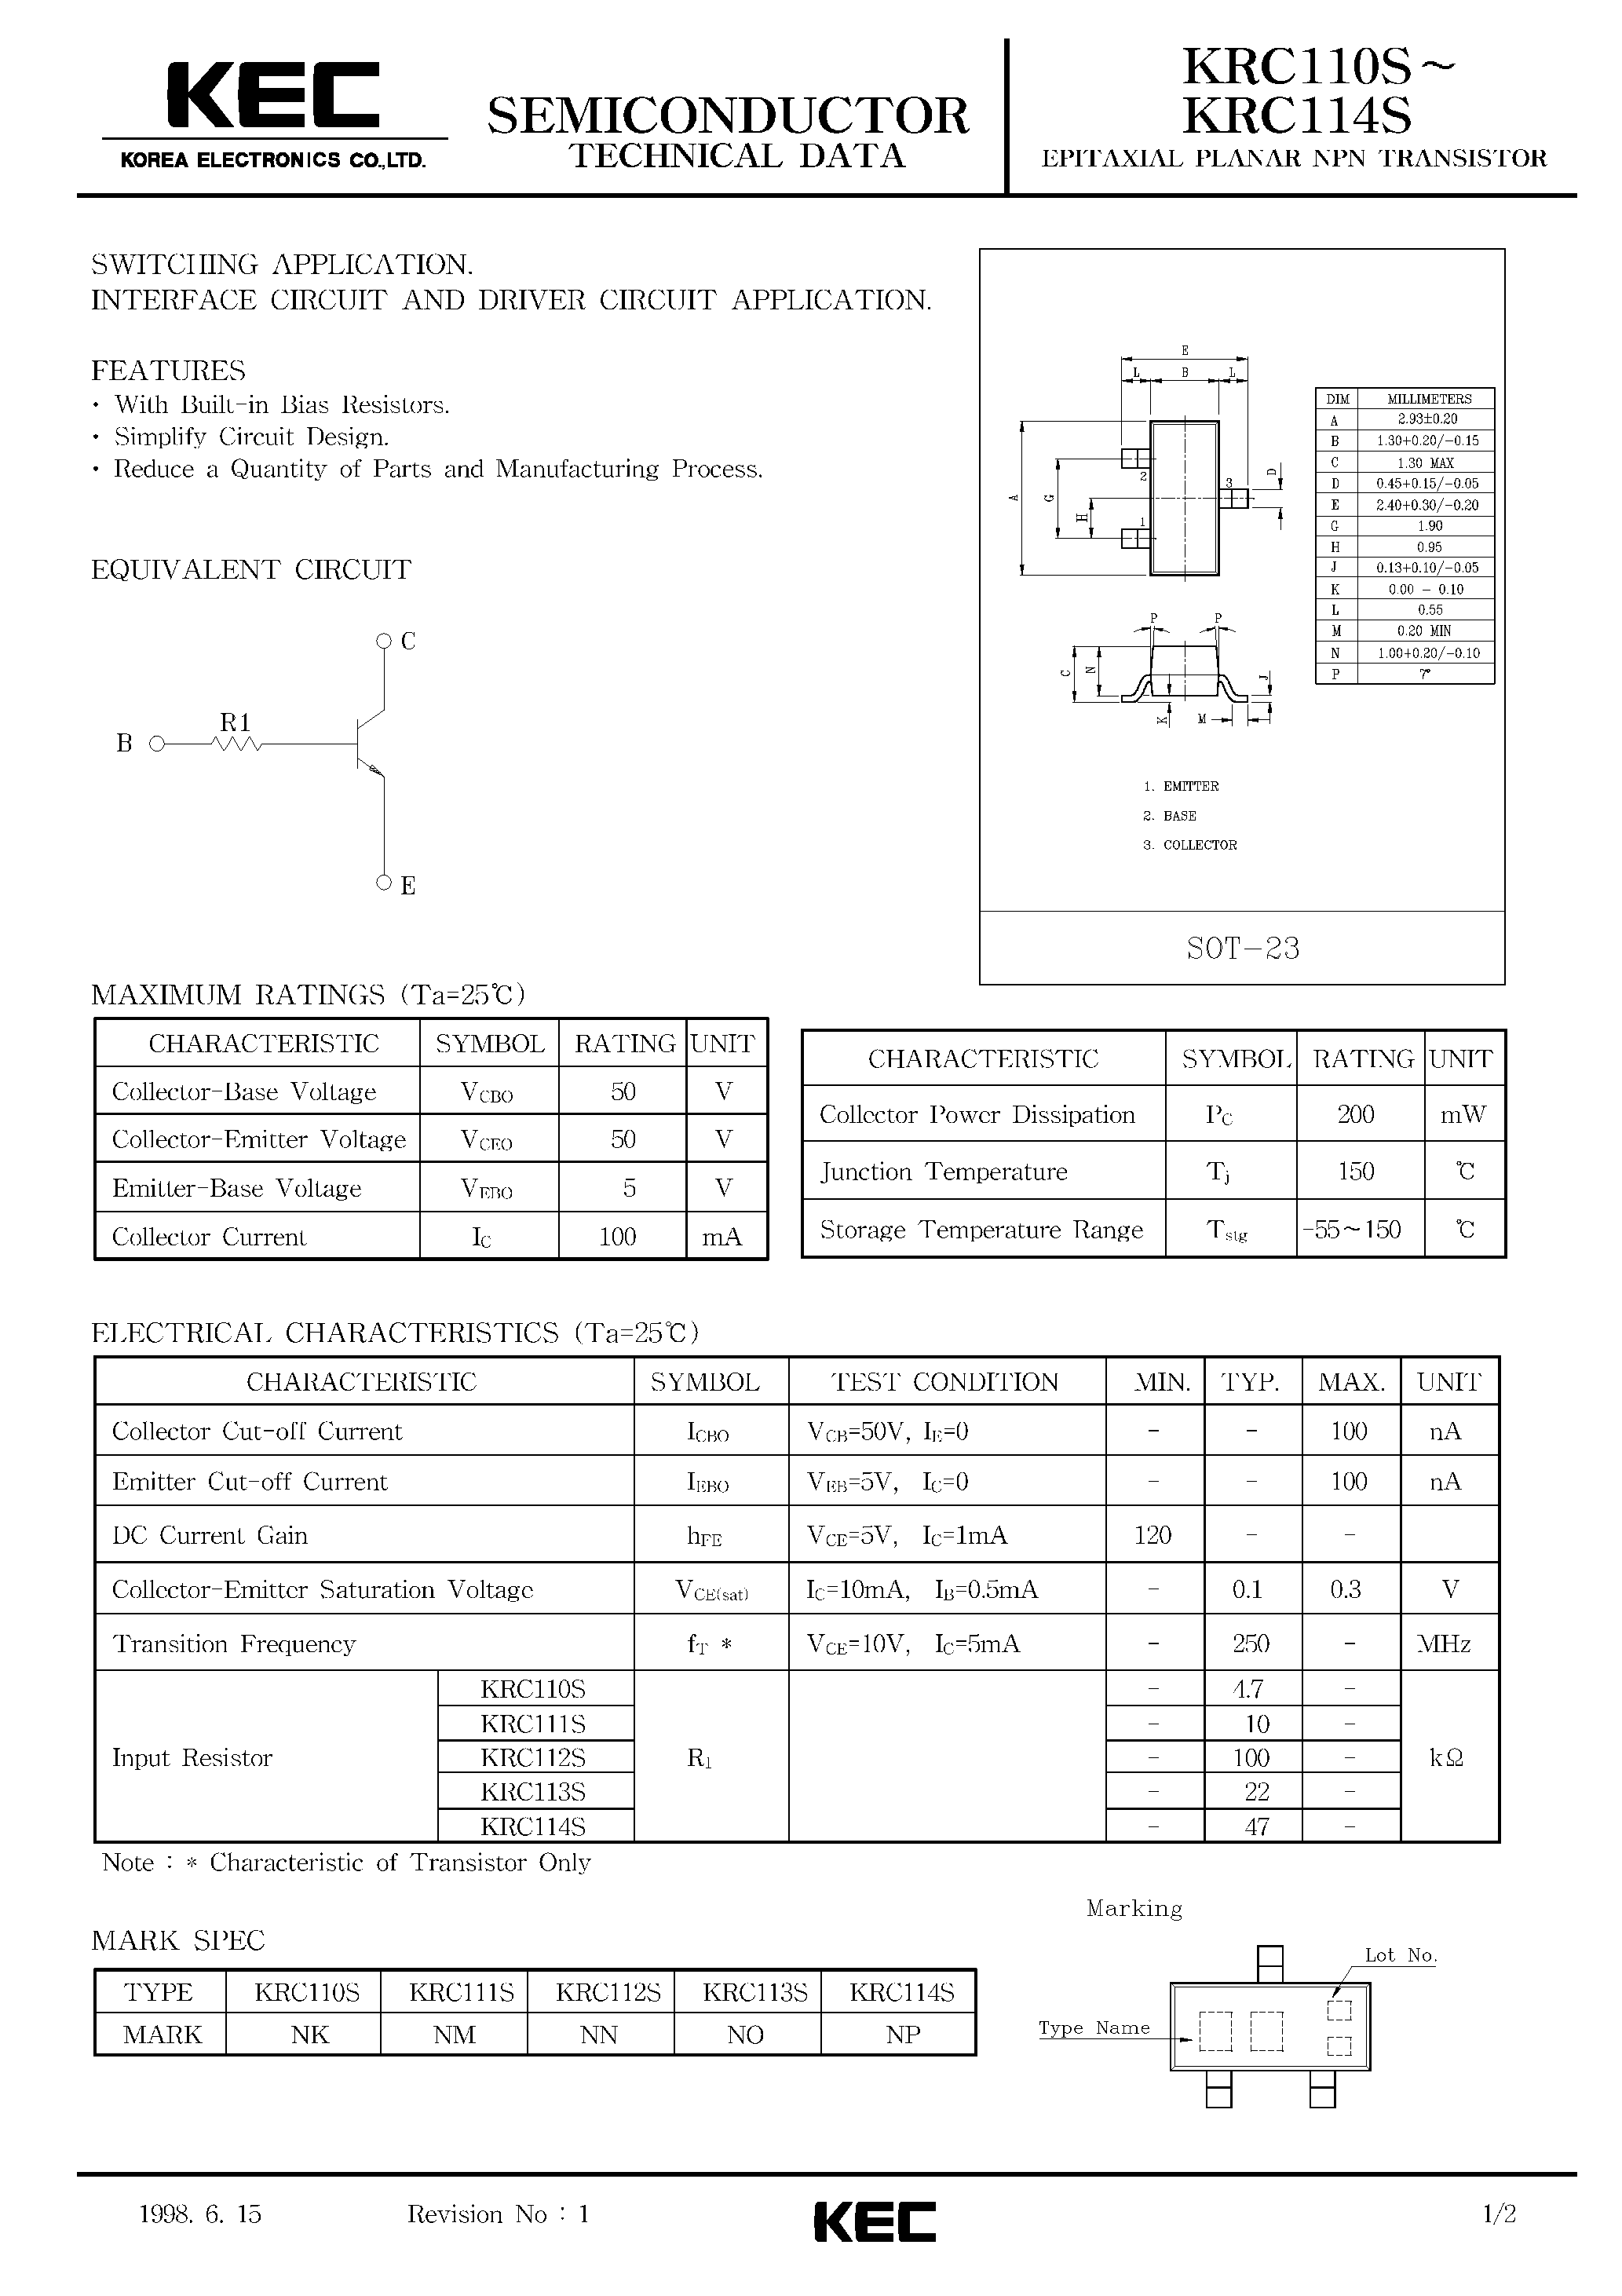 Datasheet KRC110S - (KRC110S - KRC114S) EPITAXIAL PLANAR PNP TRANSISTOR page 1